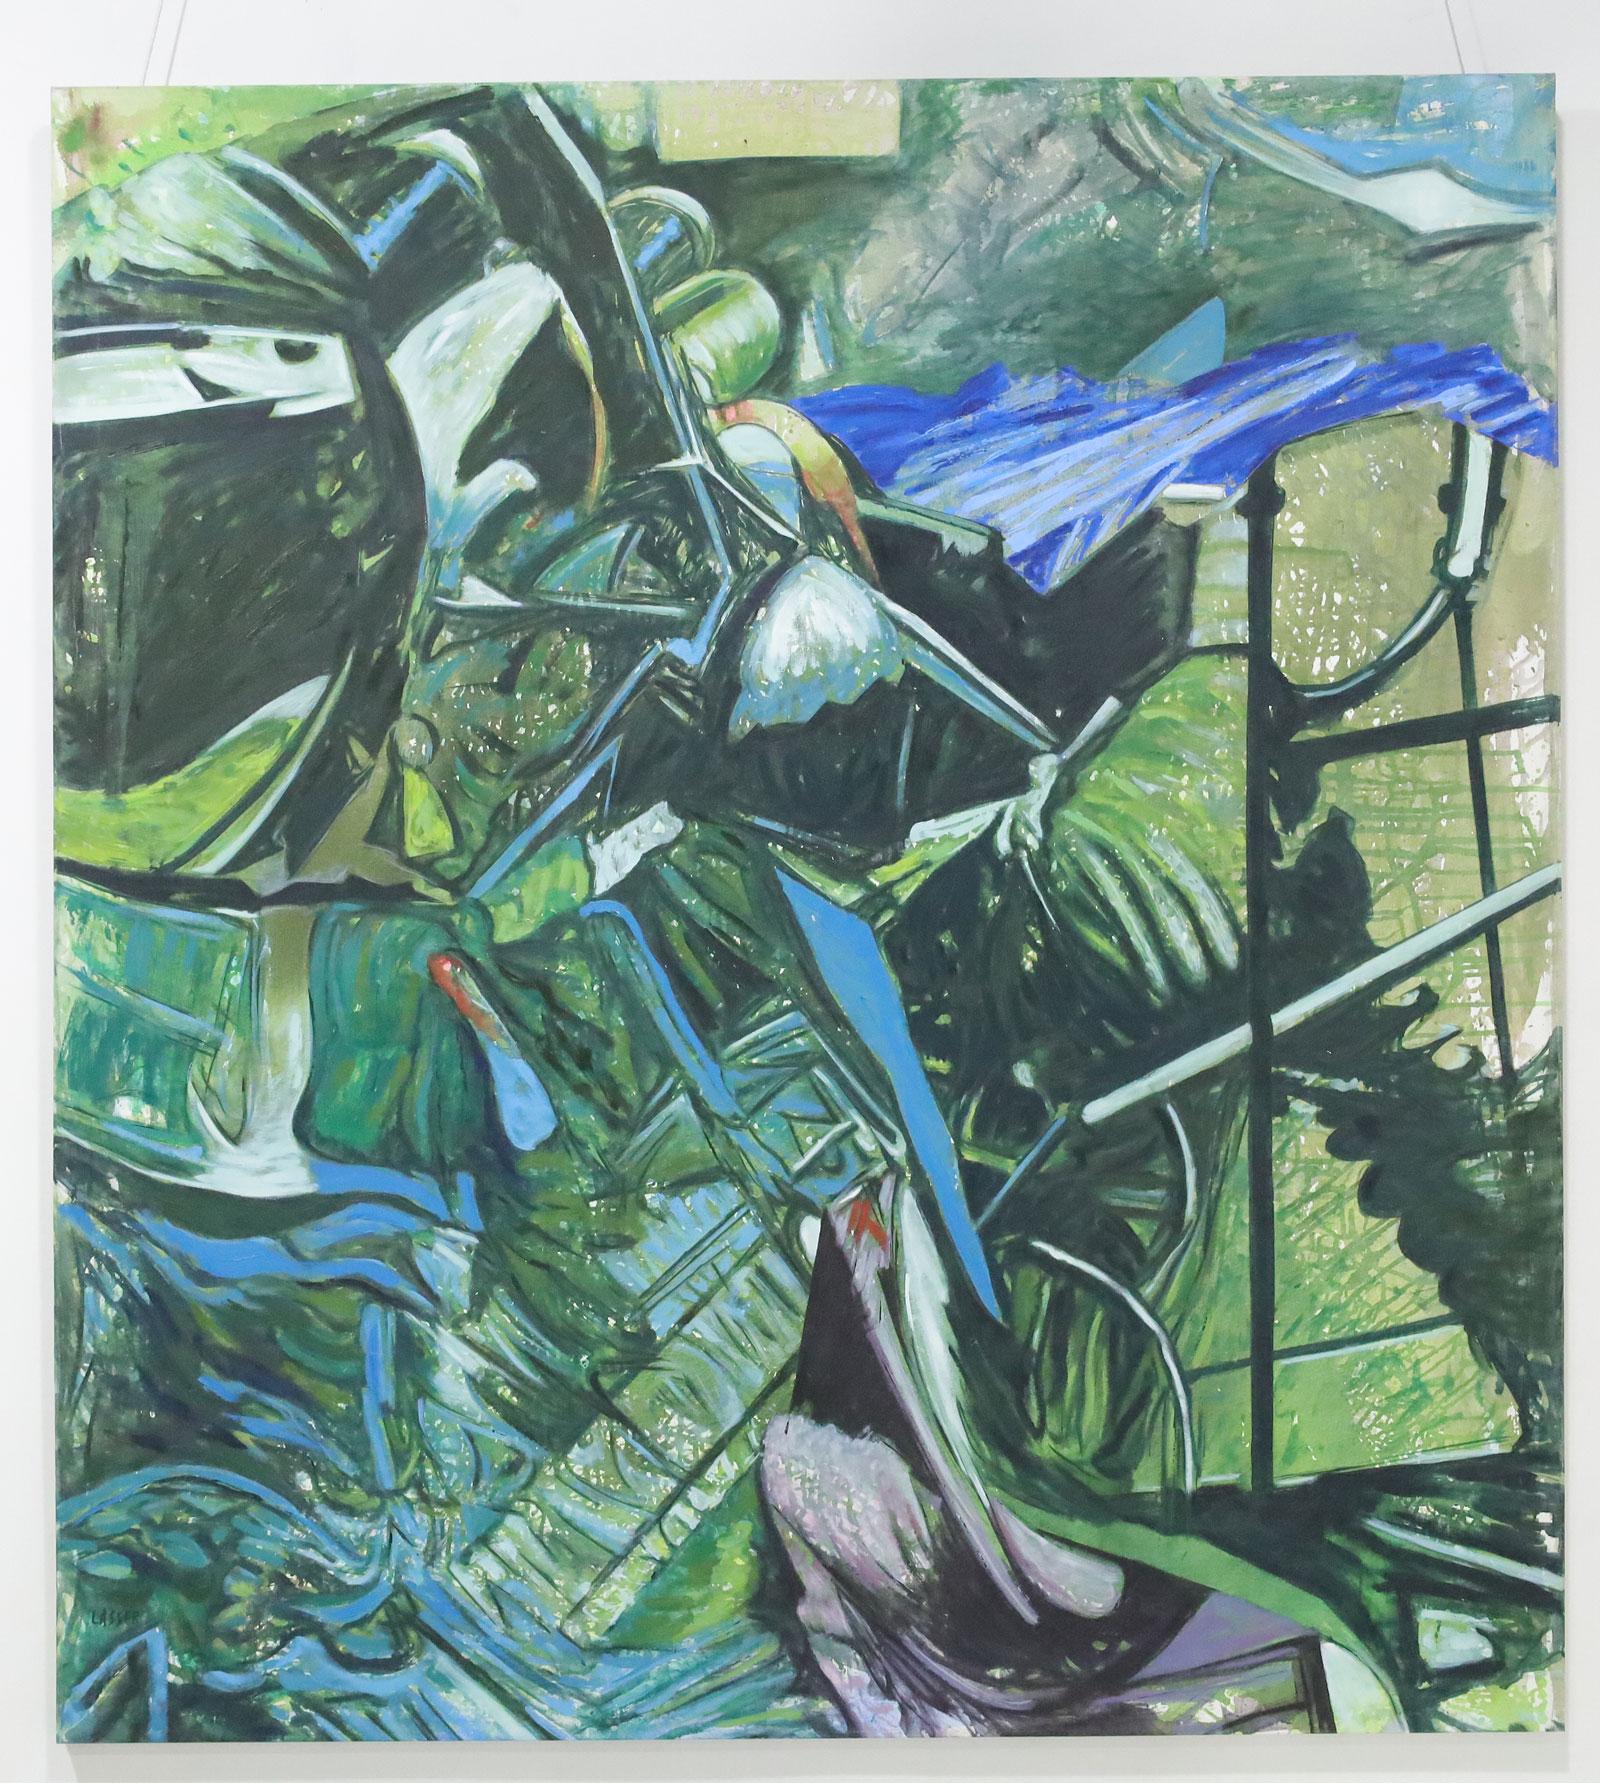 Bright colorful oil on canvas painting by Juan Carlos Lasser. Selvatico II (wild, rough, jungle, primative). 

Lasser studied at the Mutualidad de Estudiantes y Egresados de Bellas Artes (MEEBA). Since 1973, the painter of abstract, colorfully